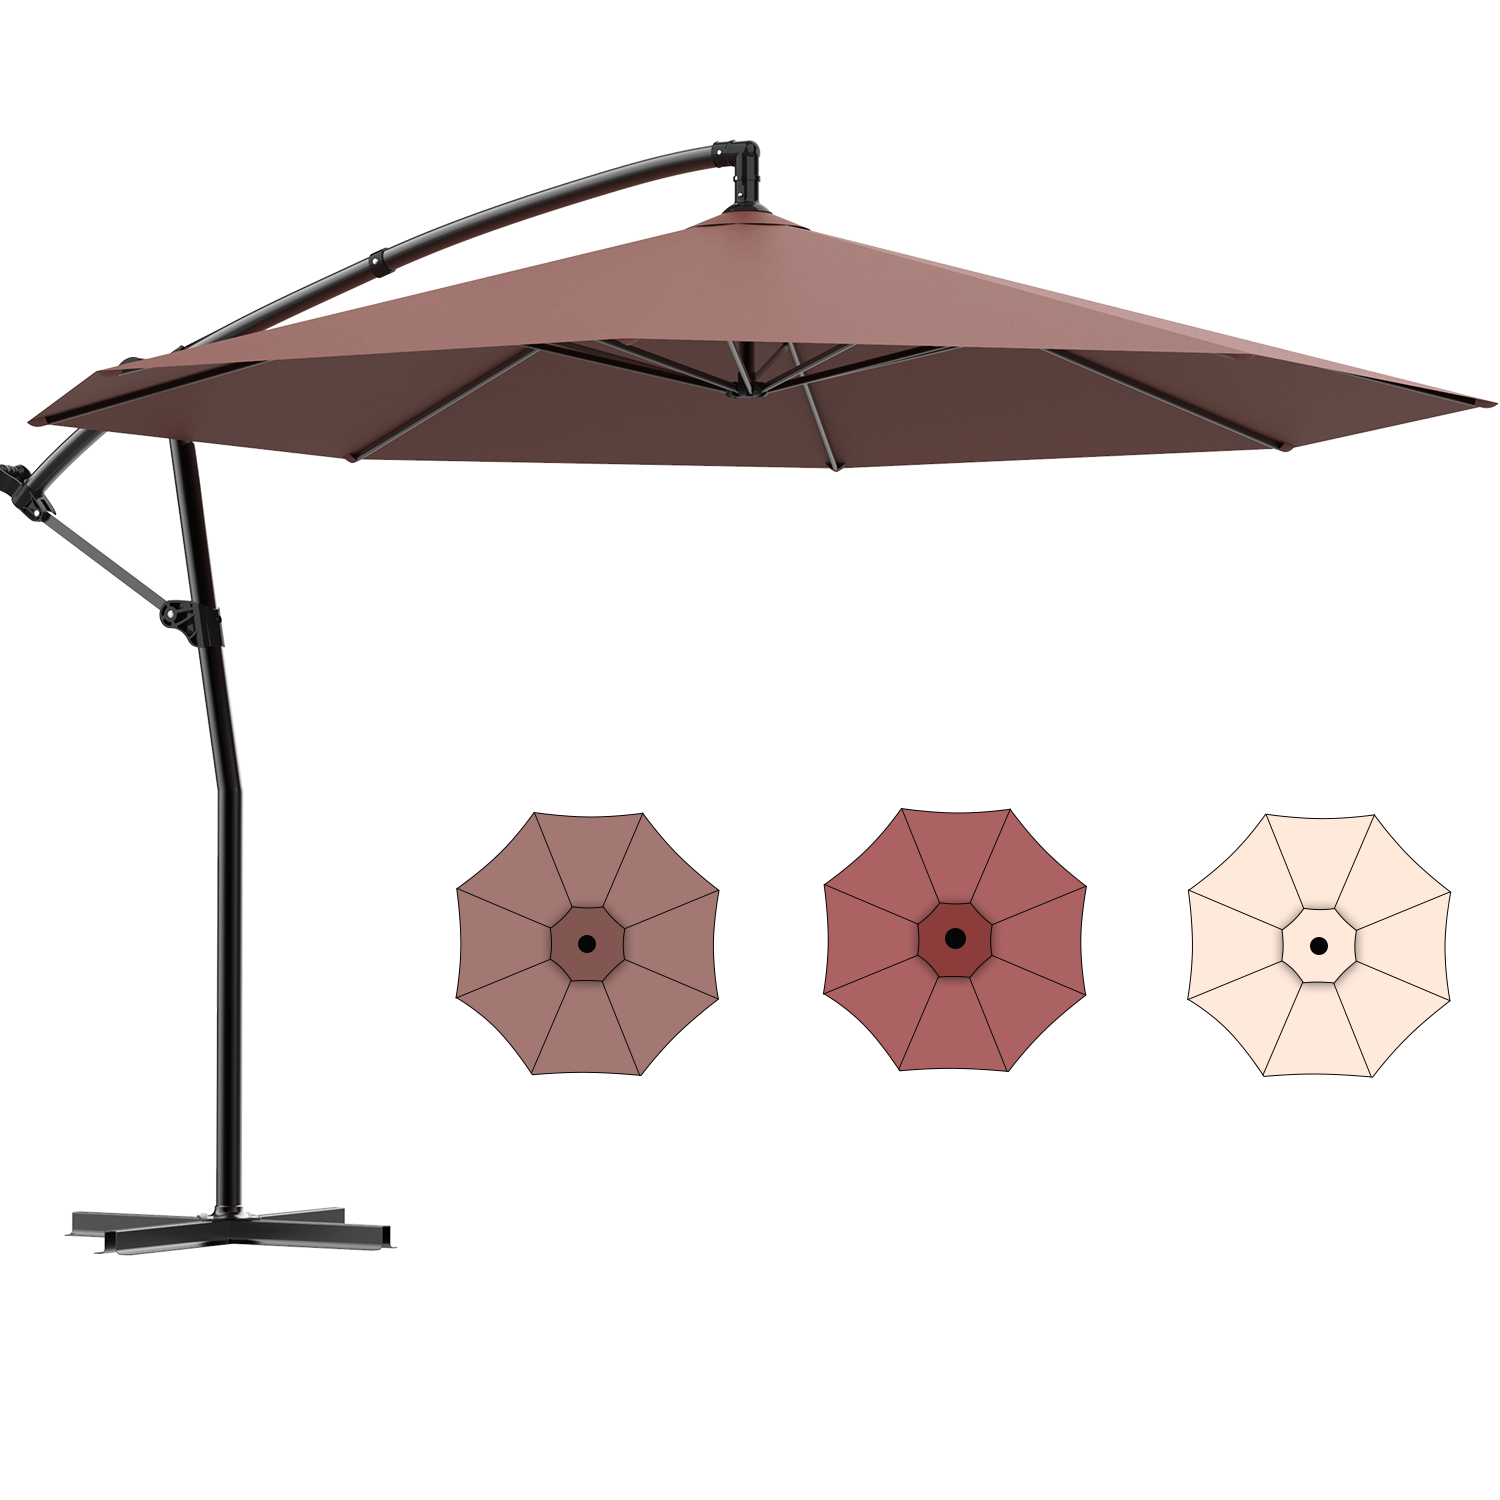 How to Restring a Patio Umbrella